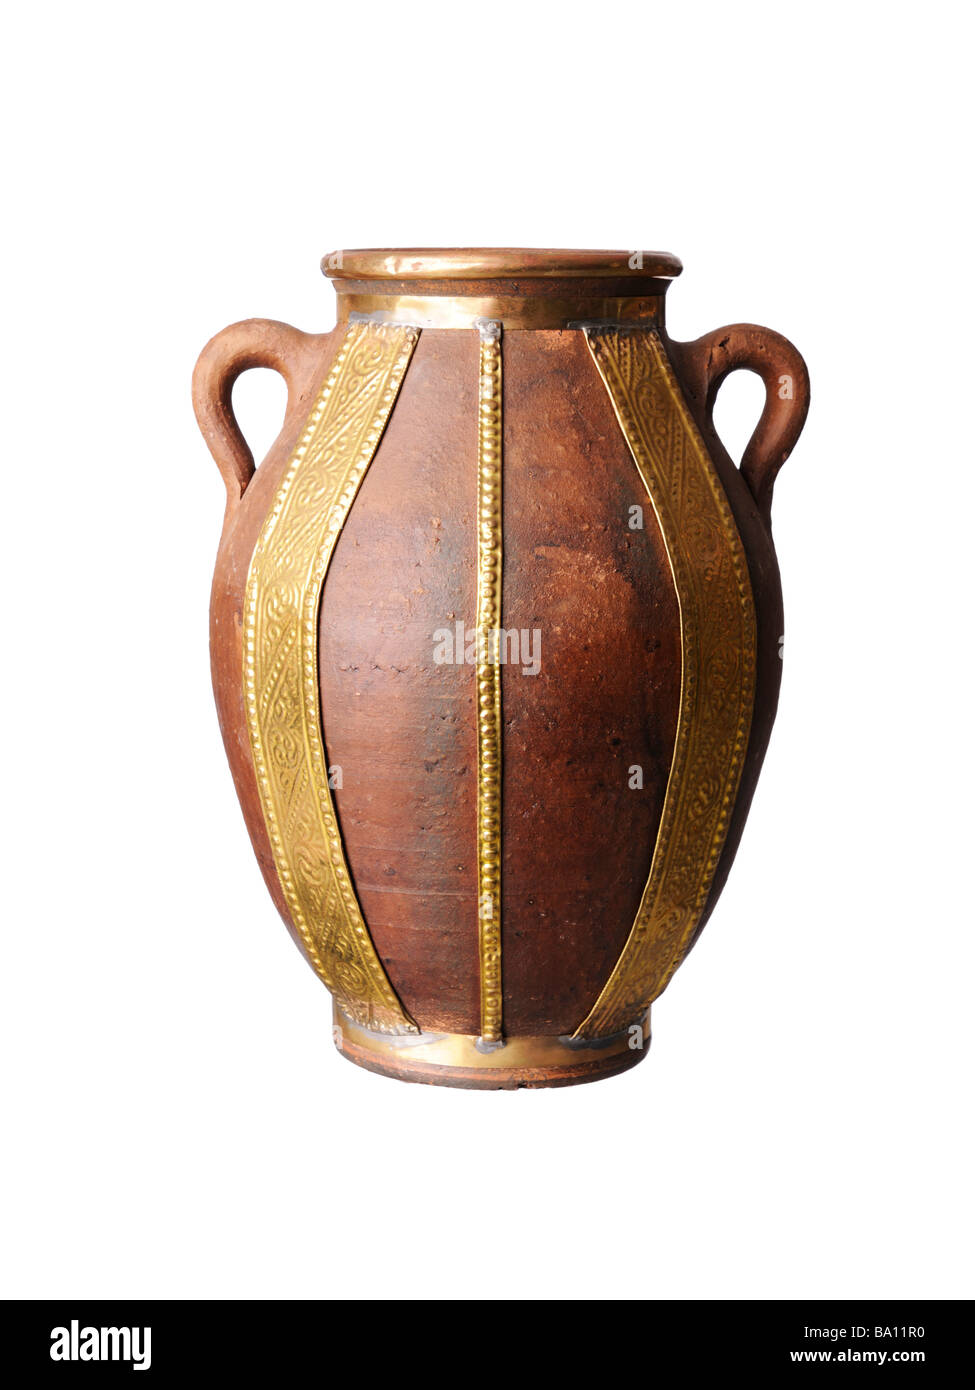 Moroccan decorative Clay pot Stock Photo